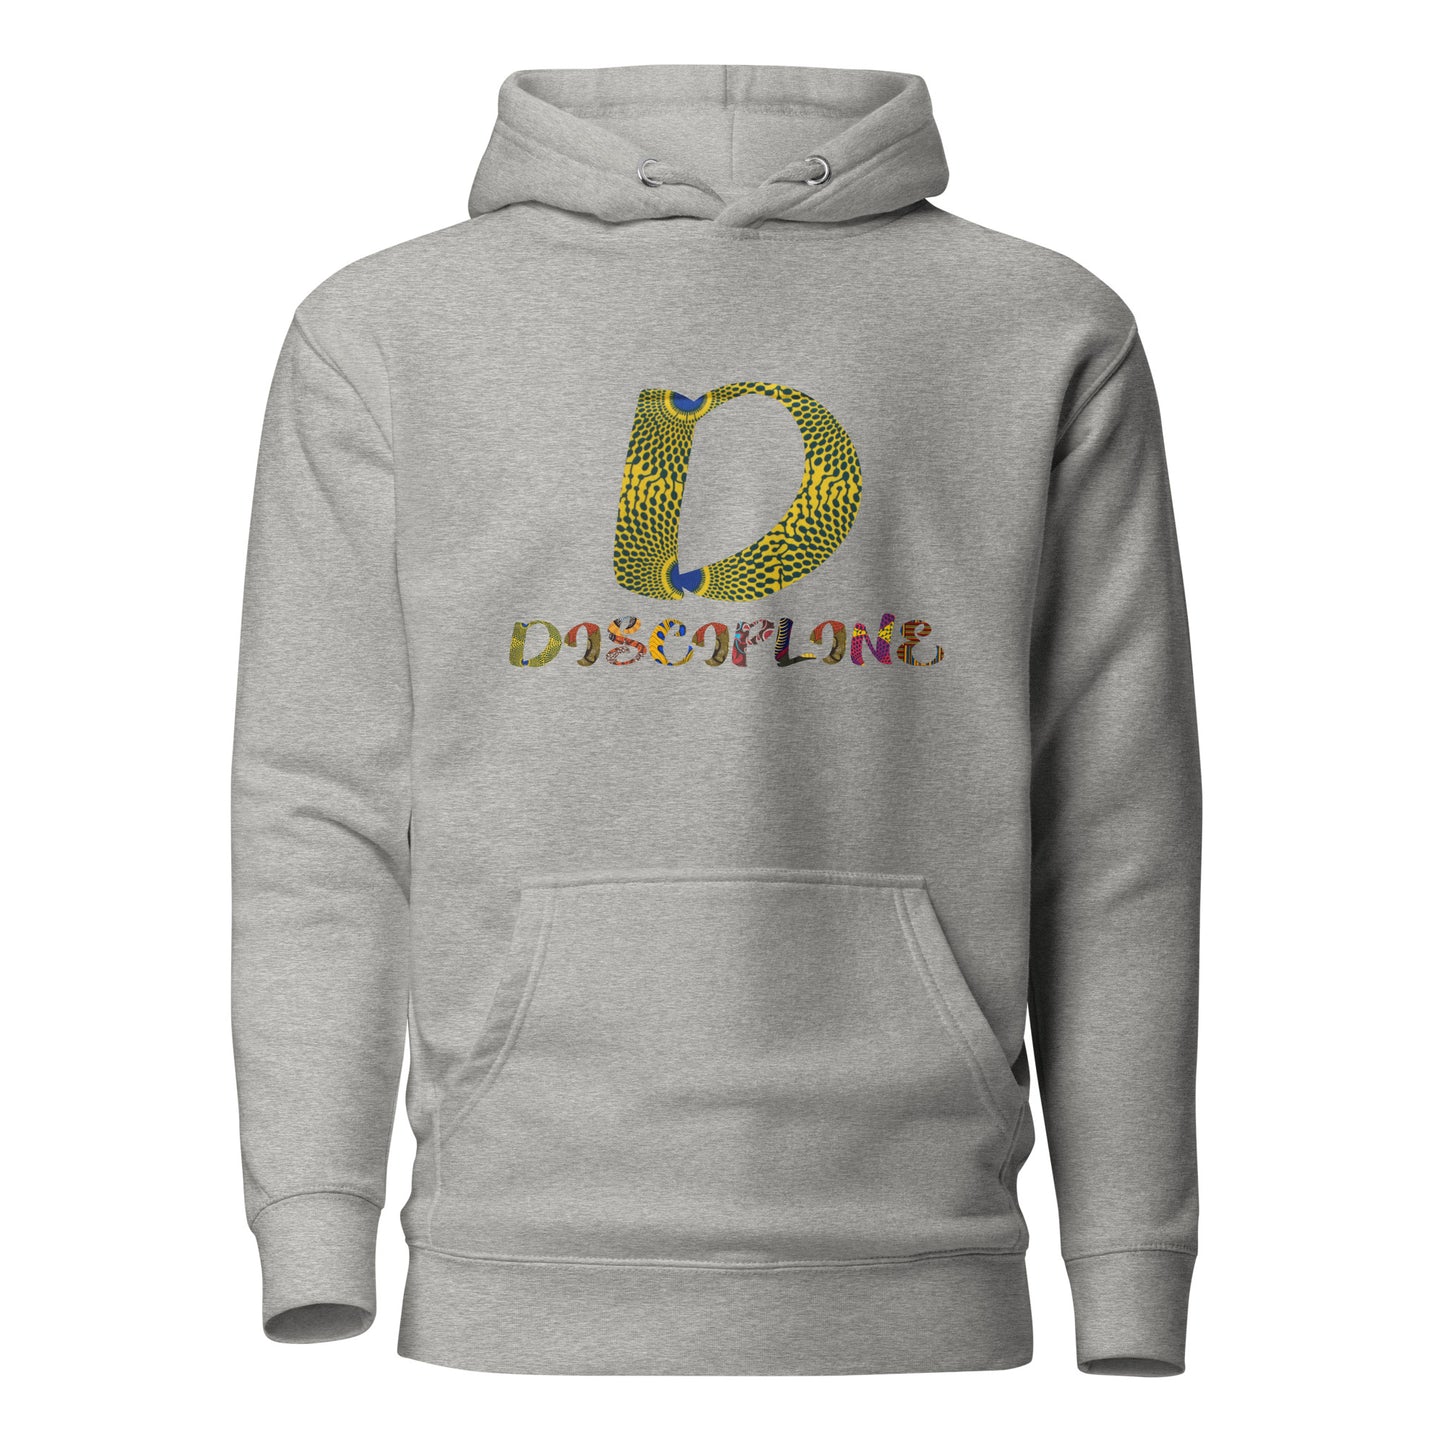 D For Discipline Unisex Afro Graphic Hoodie